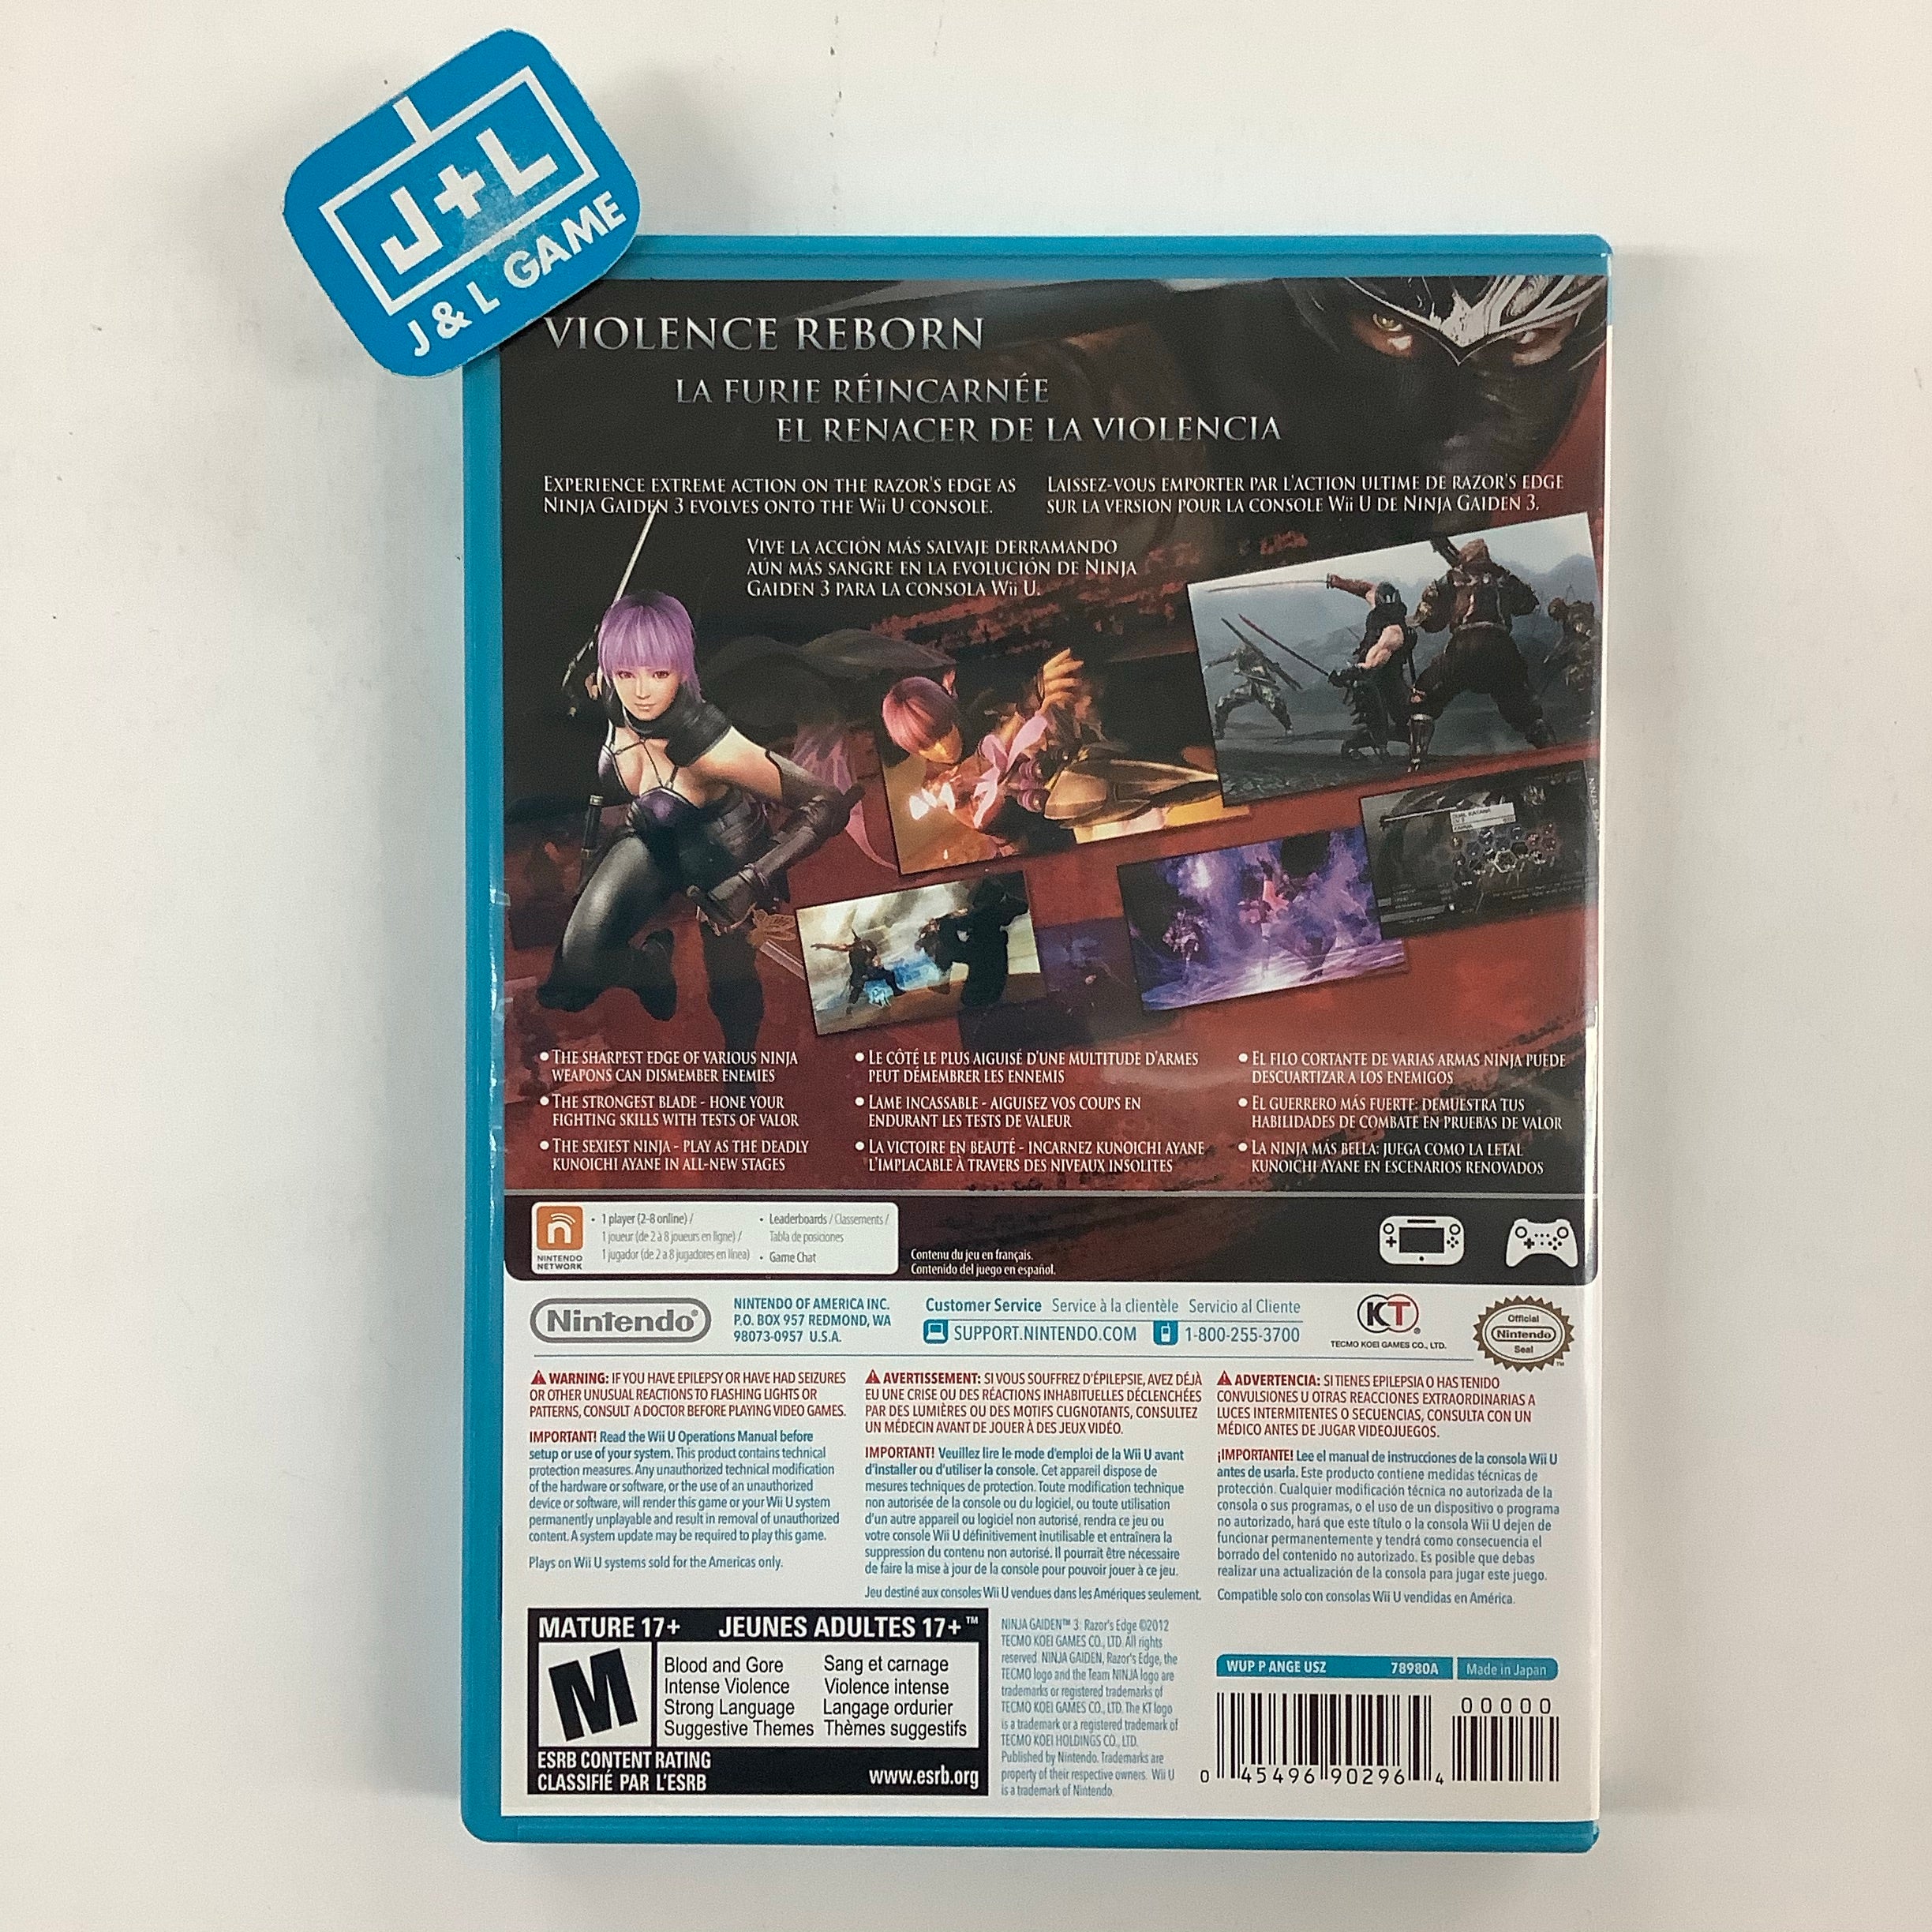 Ninja Gaiden 3: Razor's Edge - Nintendo Wii U [Pre-Owned] Video Games Nintendo   